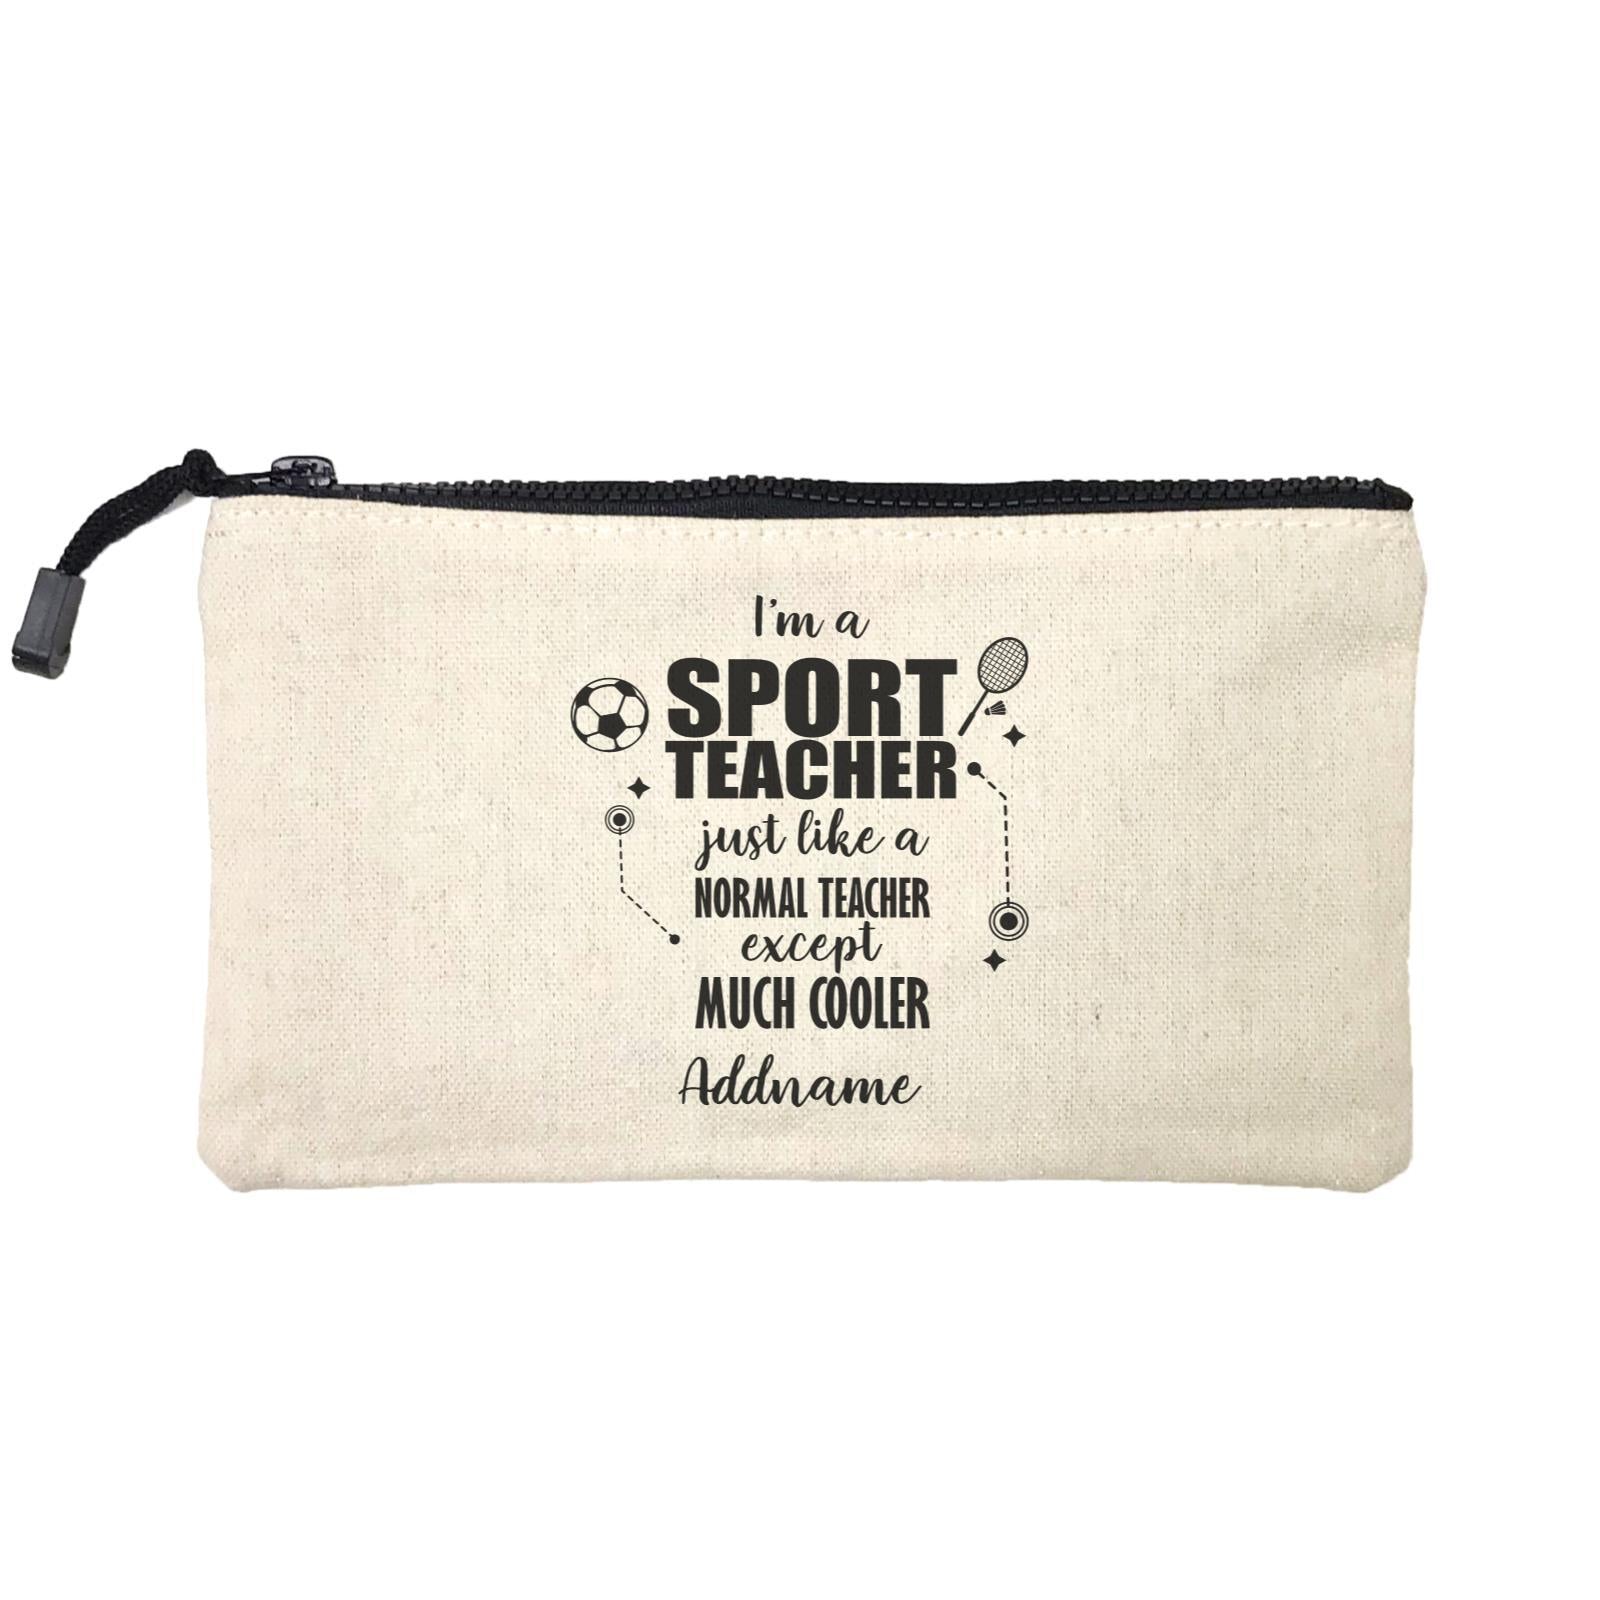 Subject Teachers 3 I'm A Sport Teacher Addname Mini Accessories Stationery Pouch